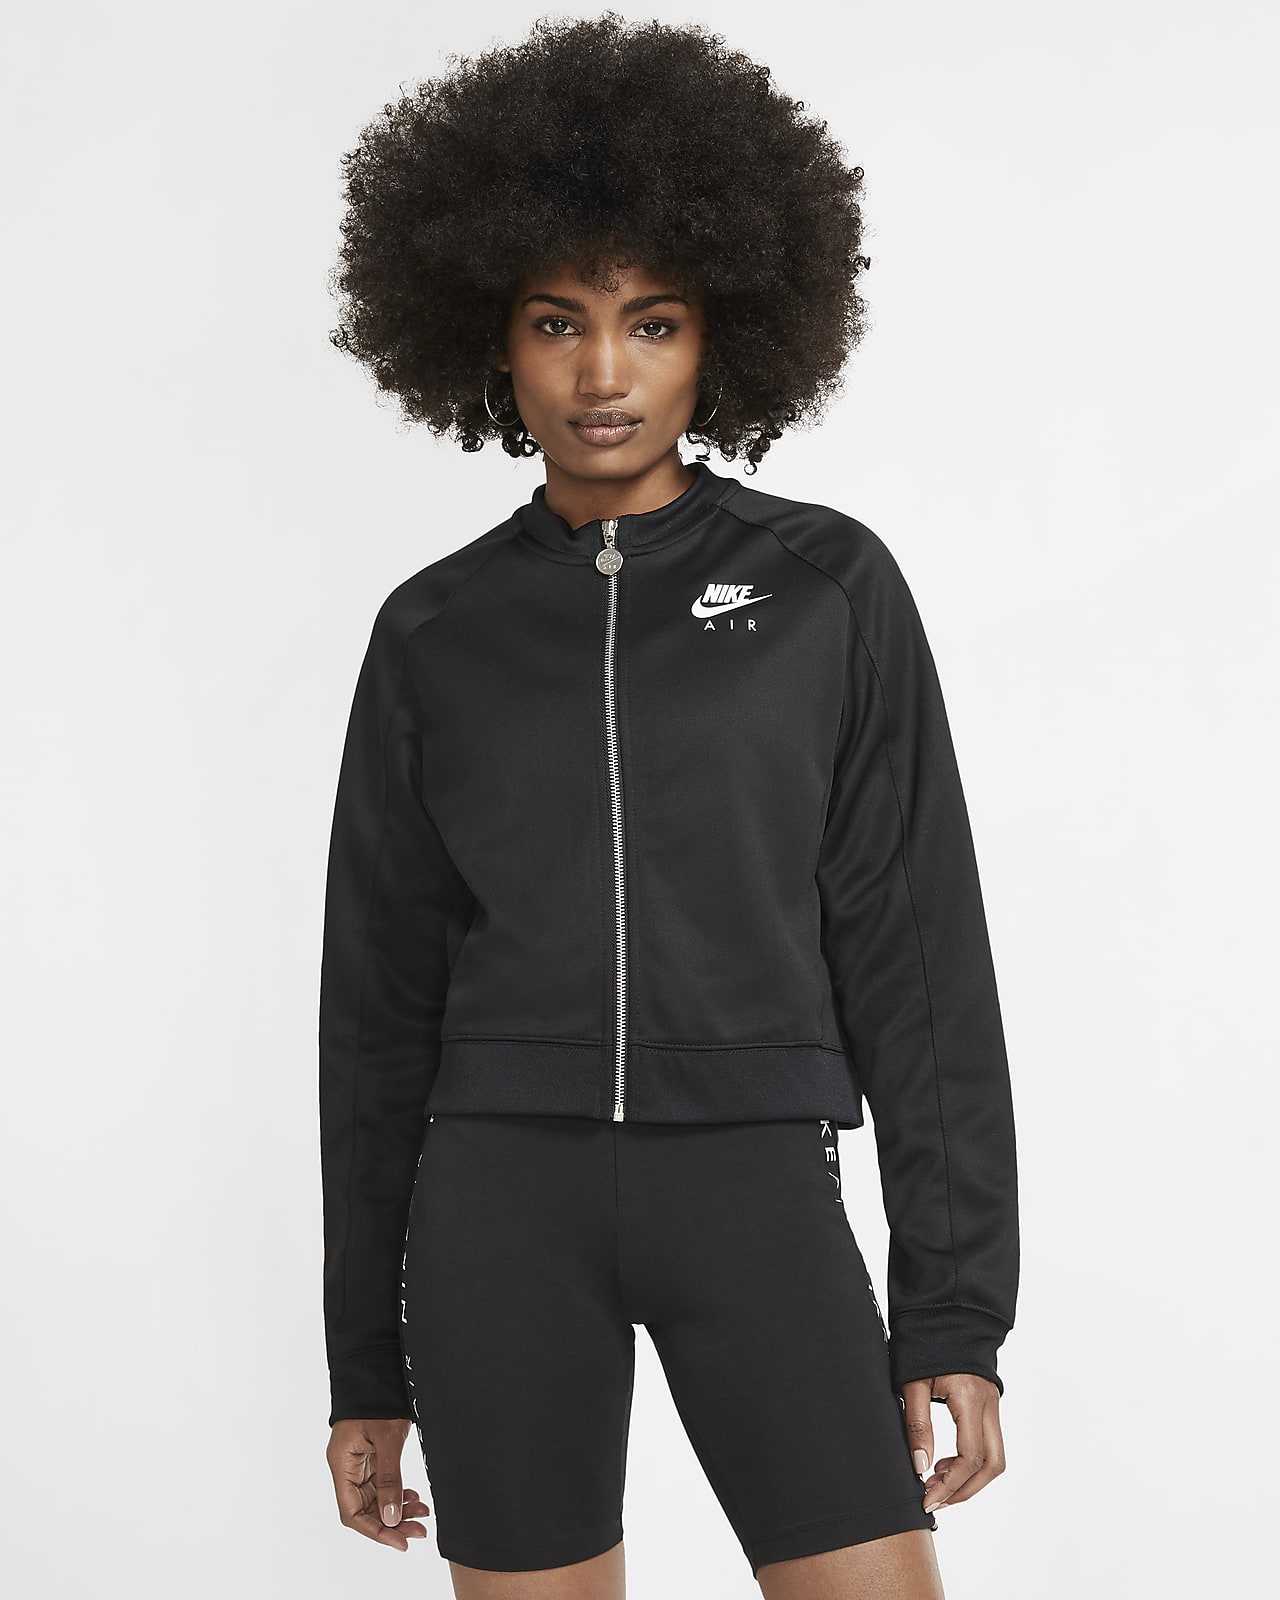 Nike Air Women's Jacket. Nike LU